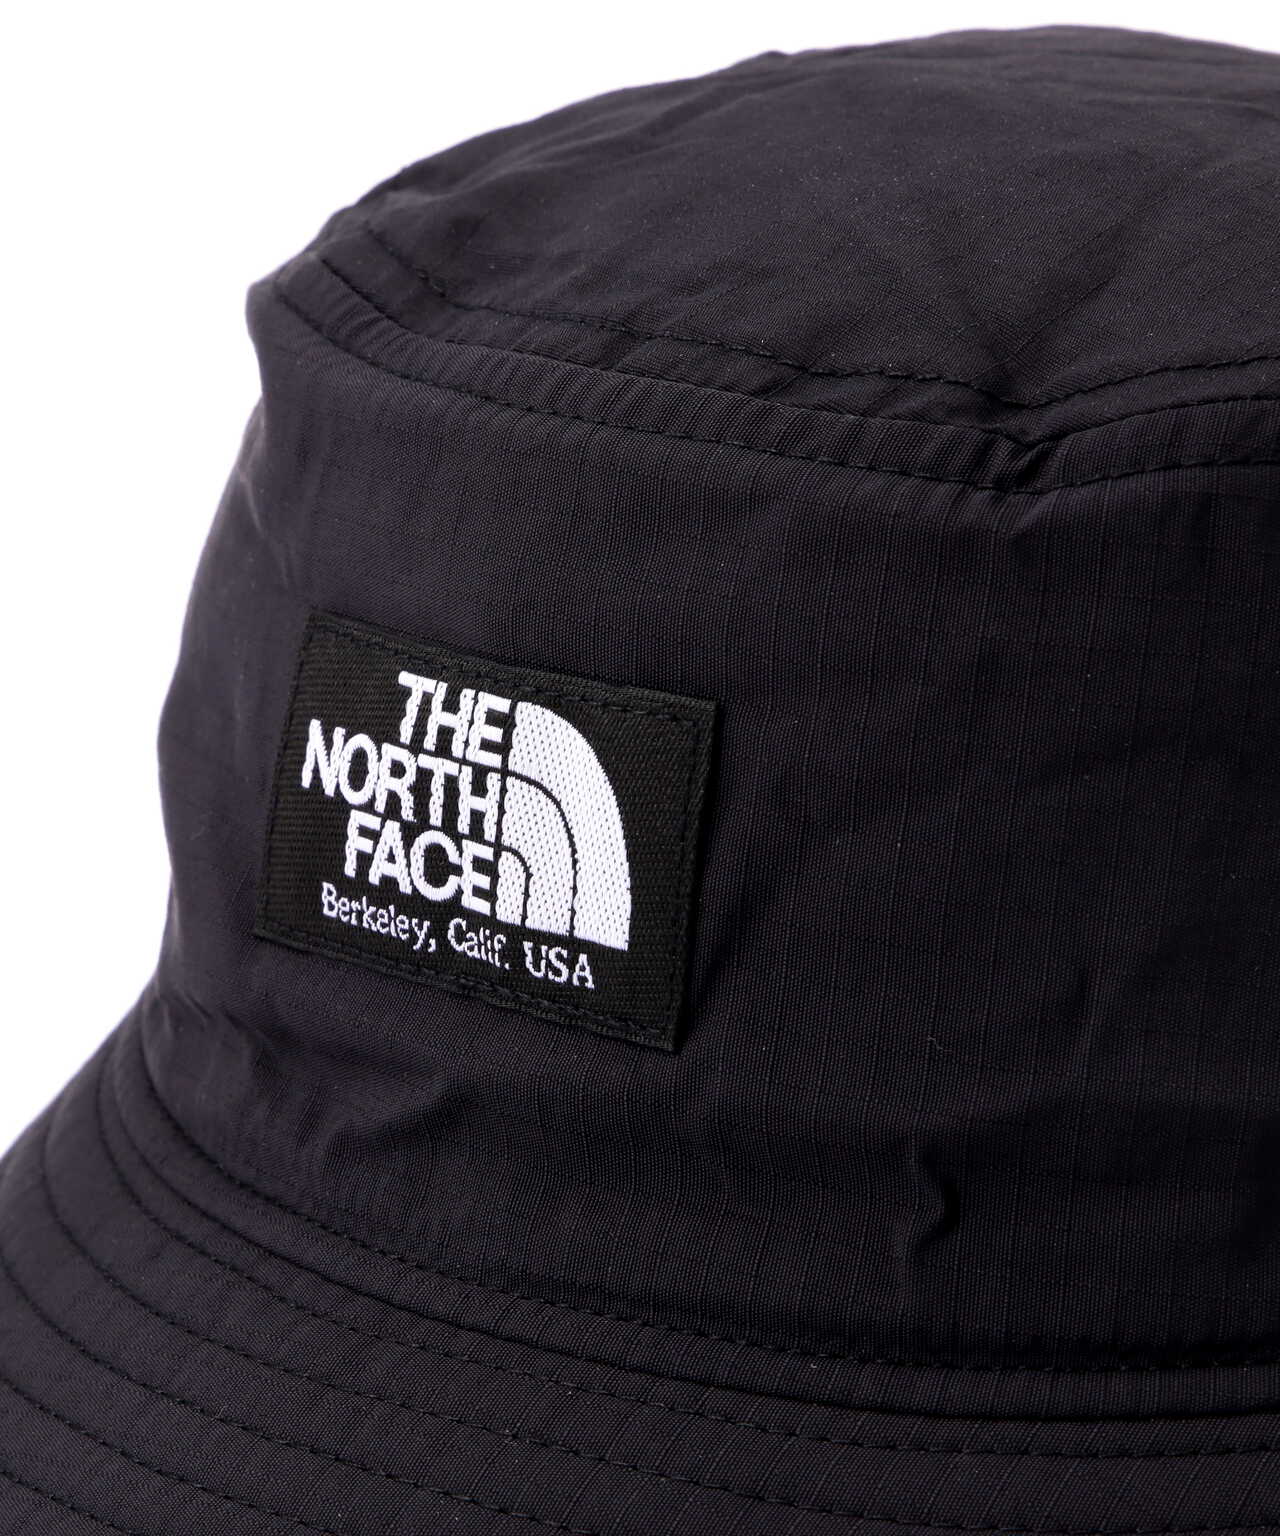 THE NORTH FACE/ザ・ノースフェイス/Campside Hat/キャンプサイド 